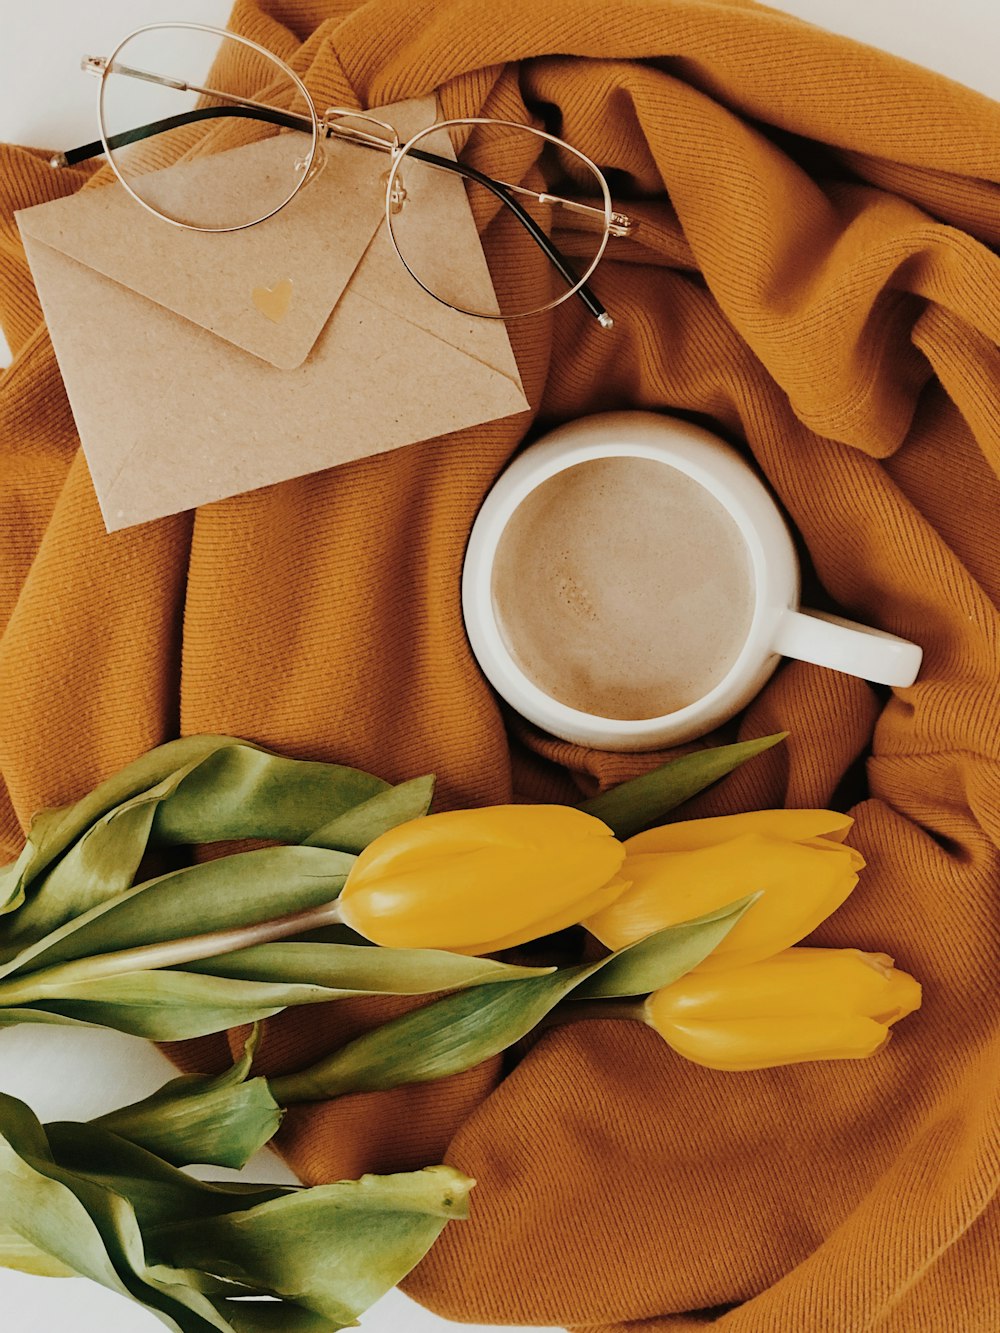 mug, eyeglasses, flowers, and envelop on brown textile